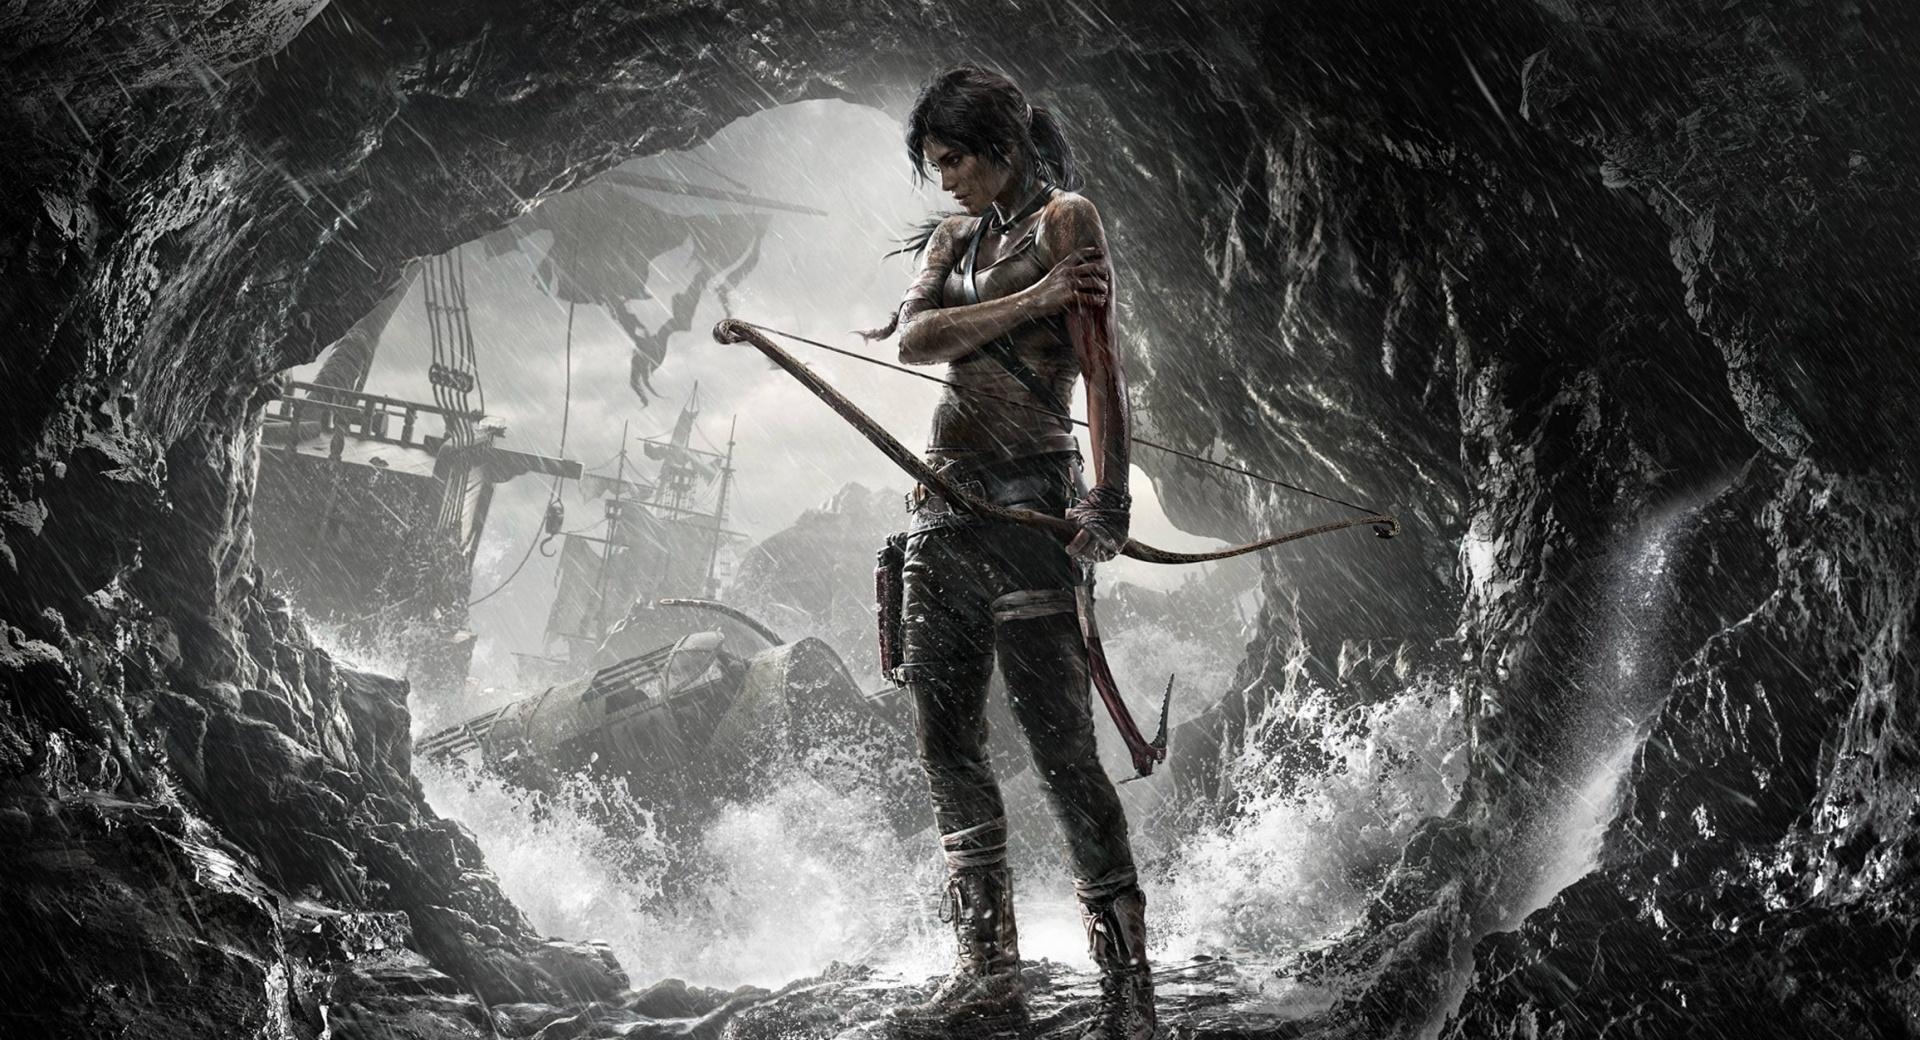 Lara Croft 2013 at 1600 x 1200 size wallpapers HD quality